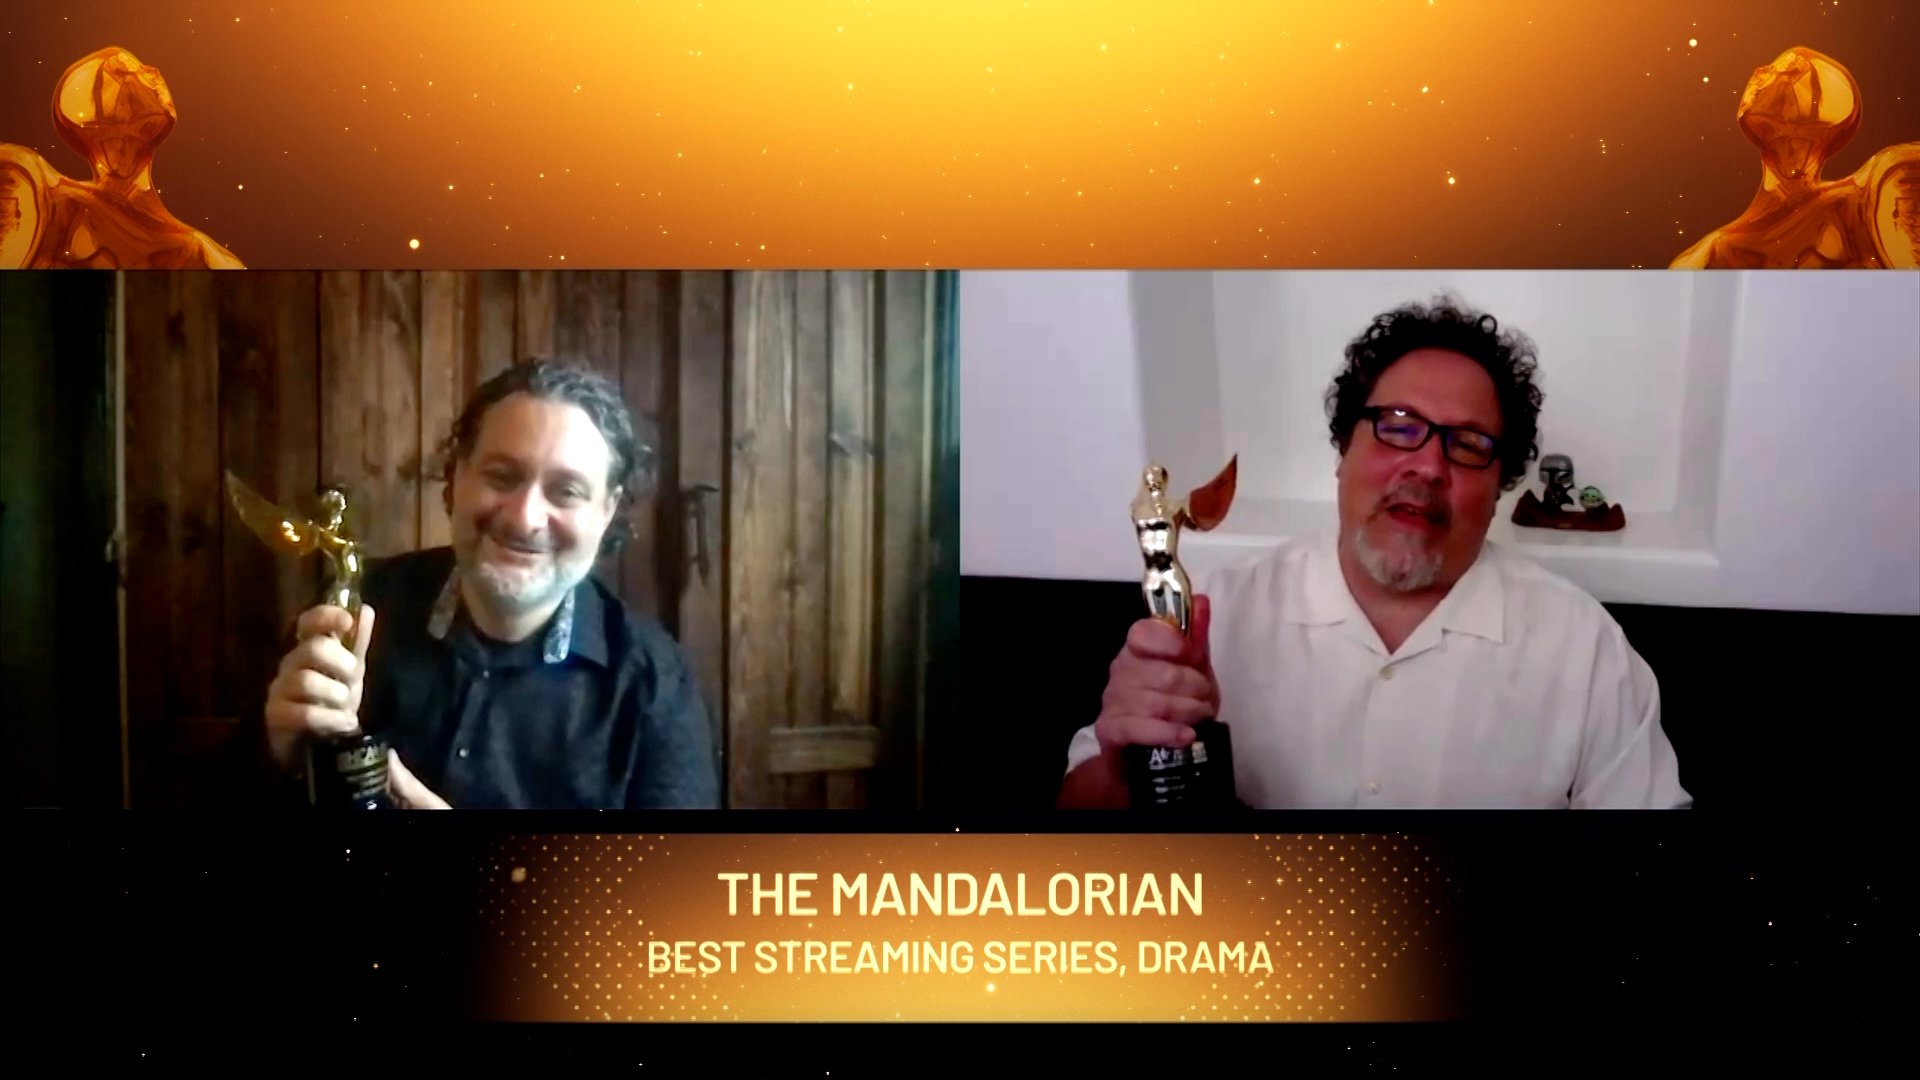 The Mandalorian wins Best Streaming Series, Drama